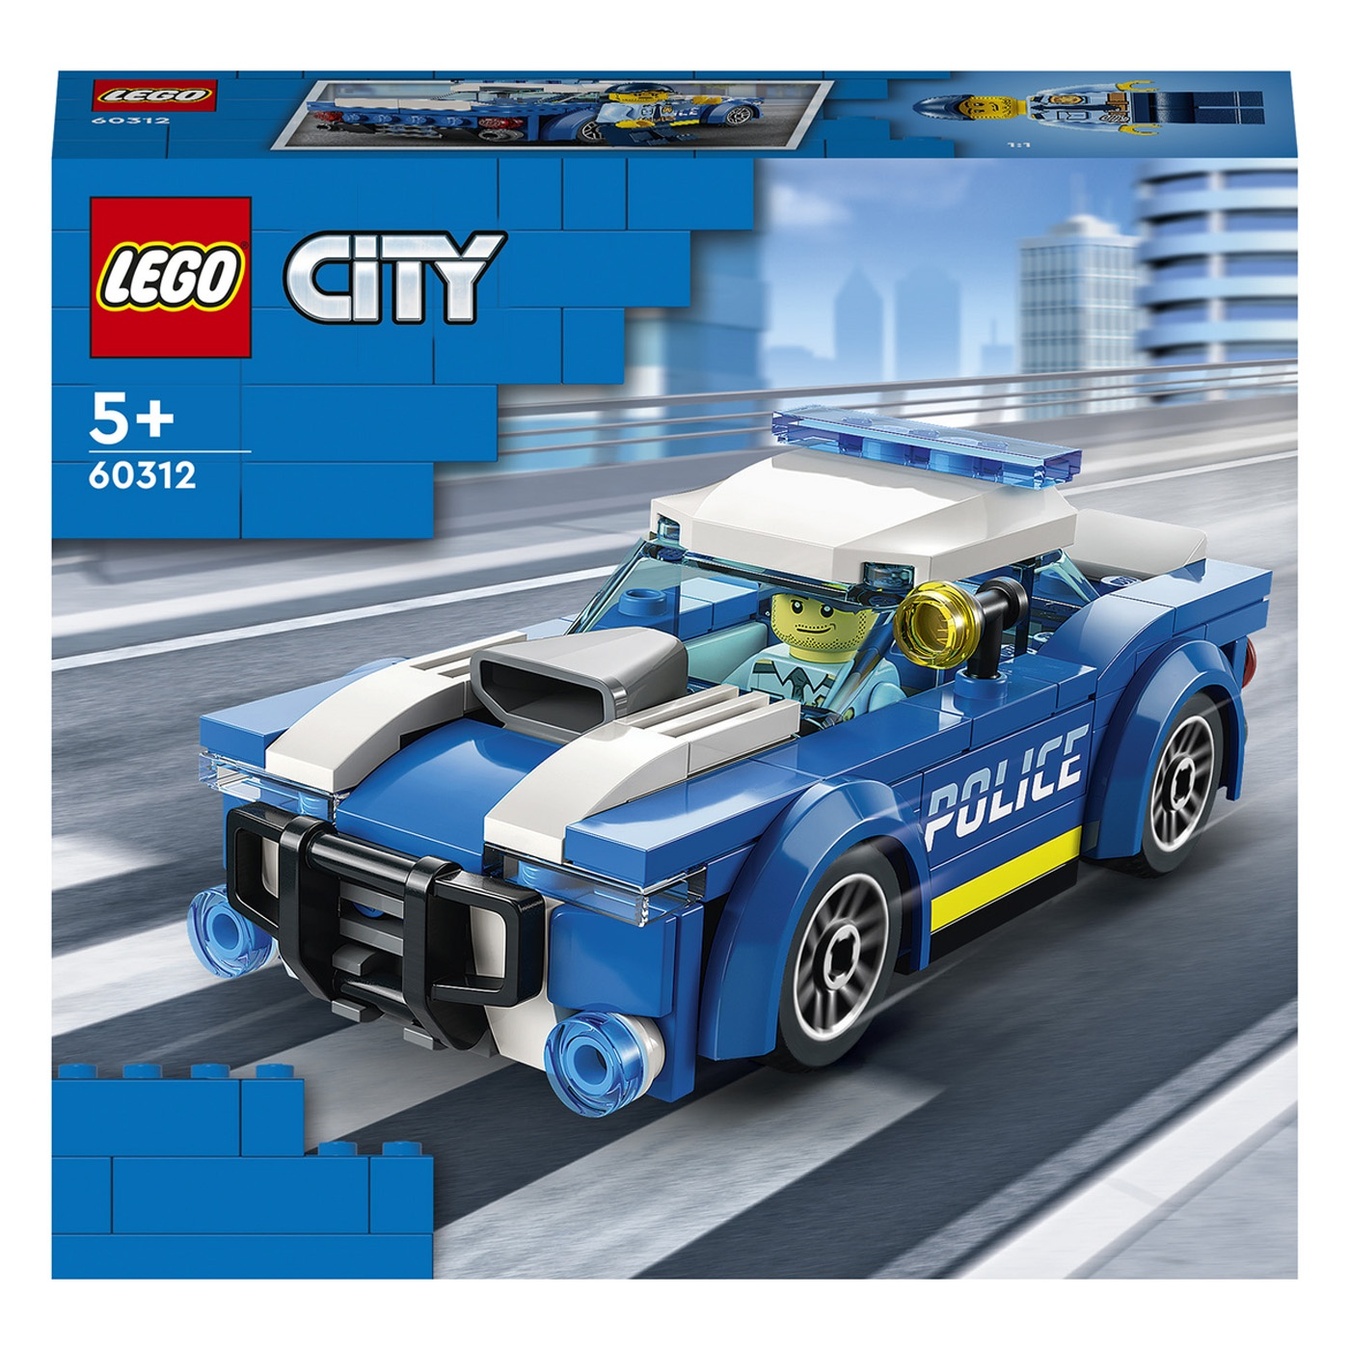 Constructor LEGO City Police car